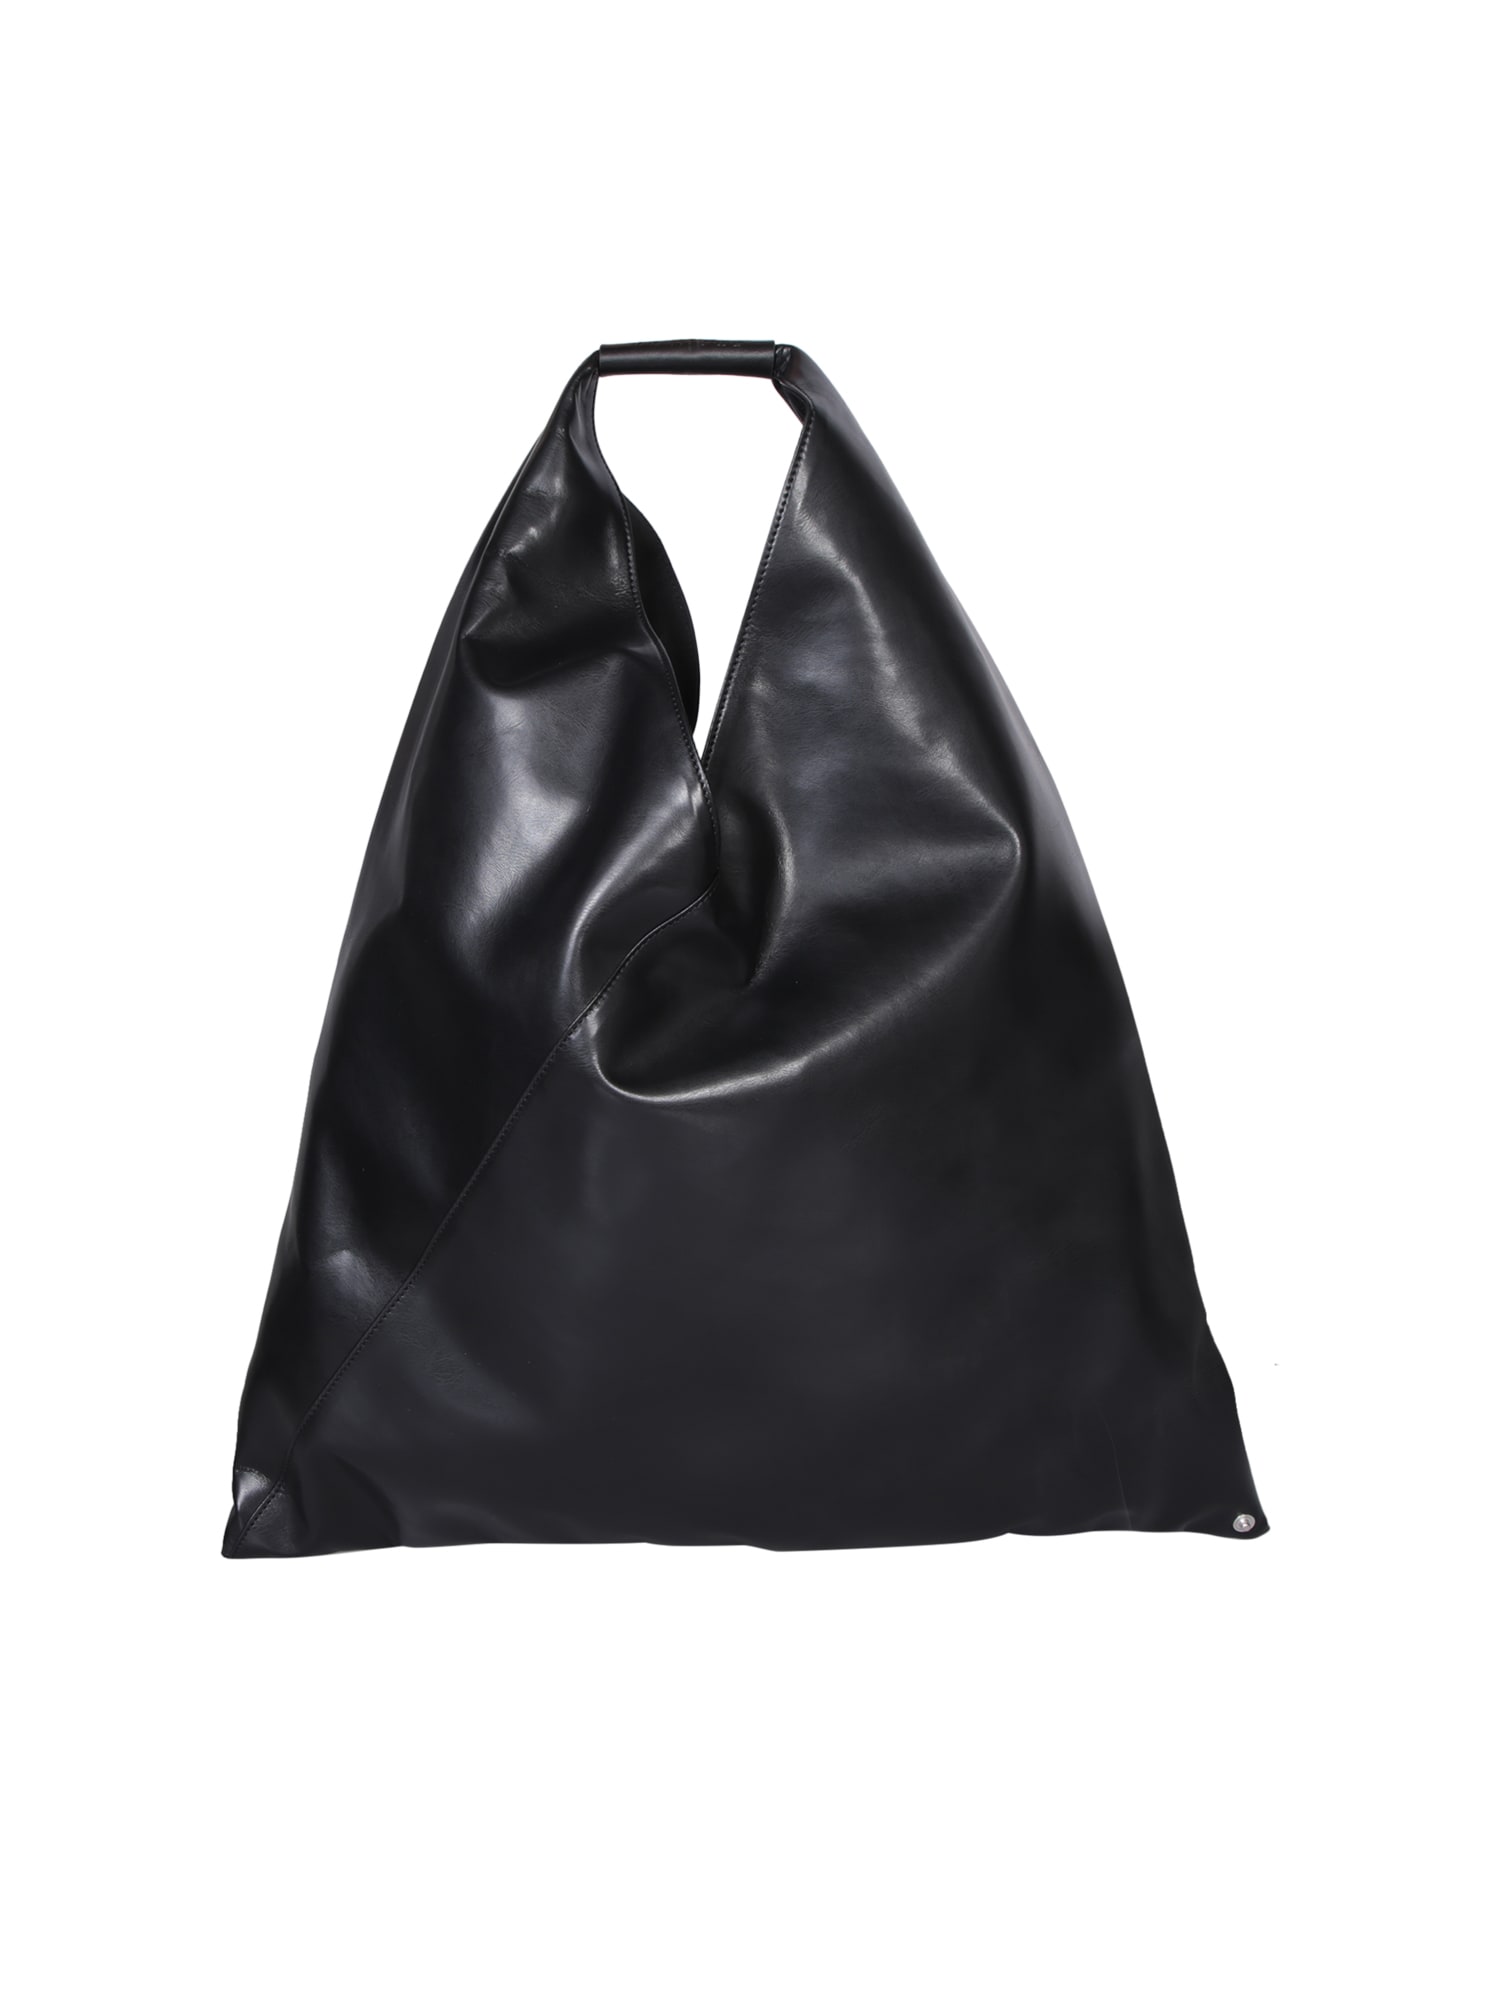 Mm6 Maison Margiela Japanese Glossy Black Bag